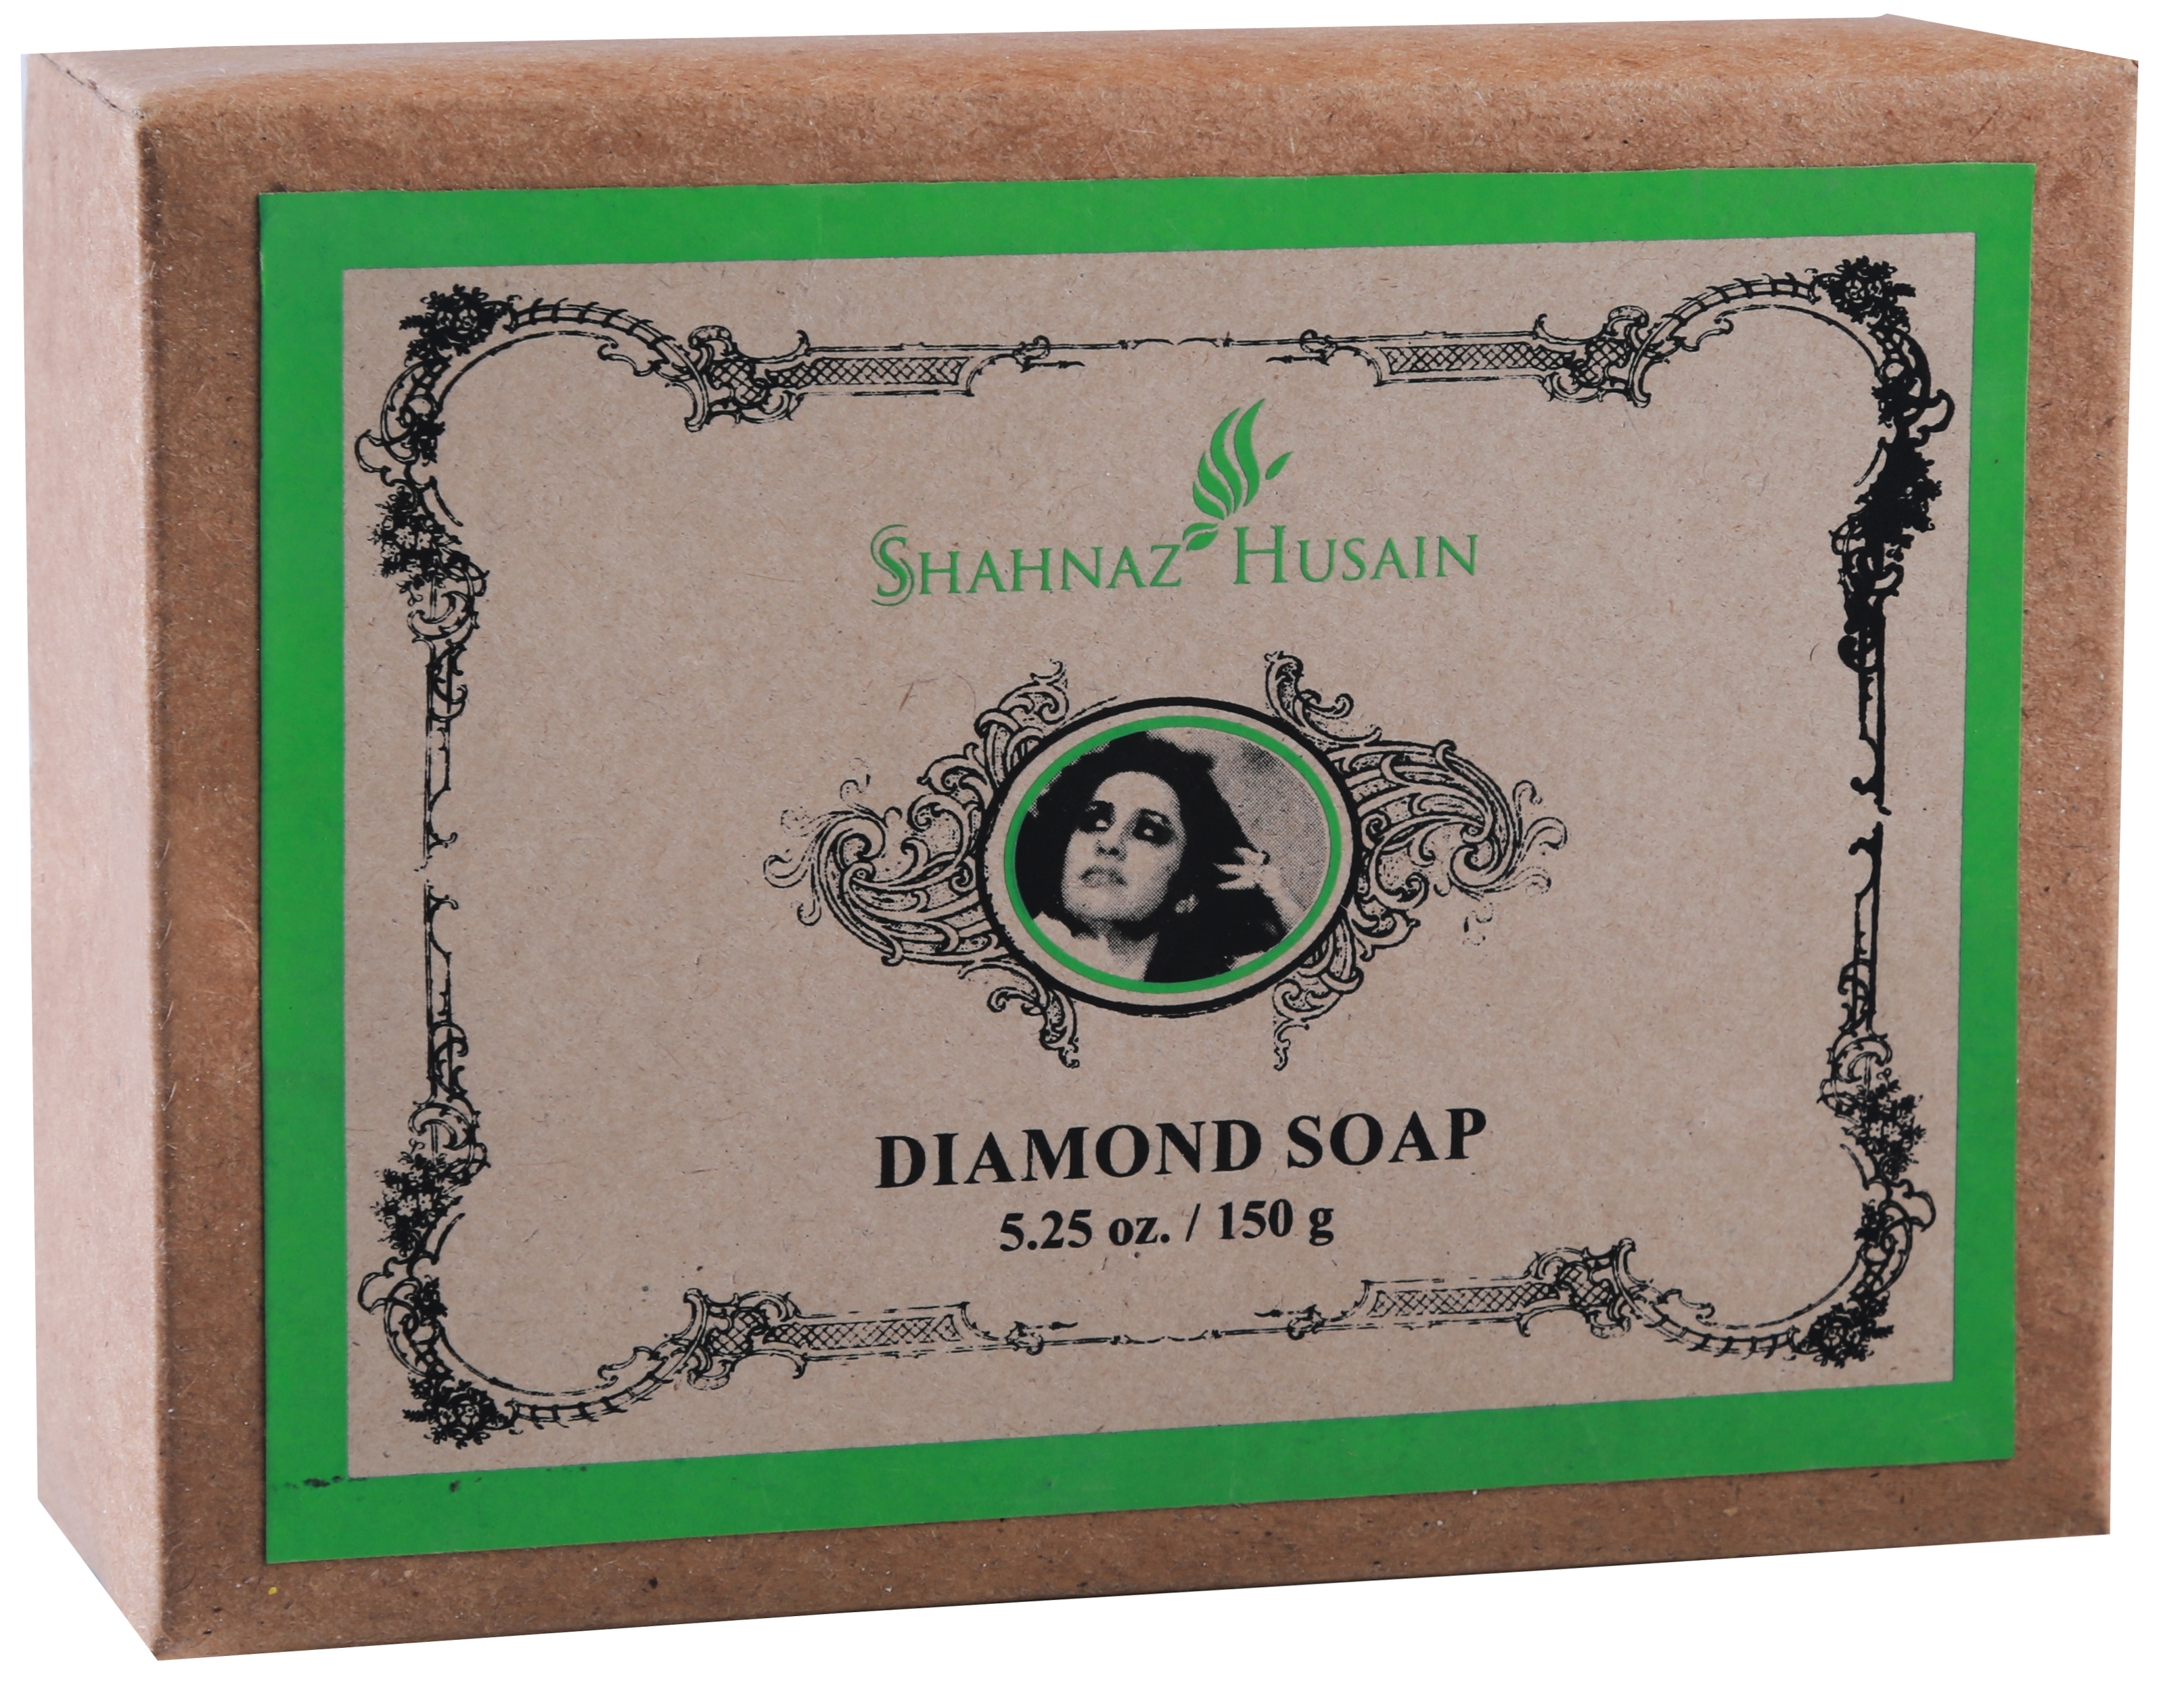 Shahnaz Husain Diamond Beauty and Fairness Soap